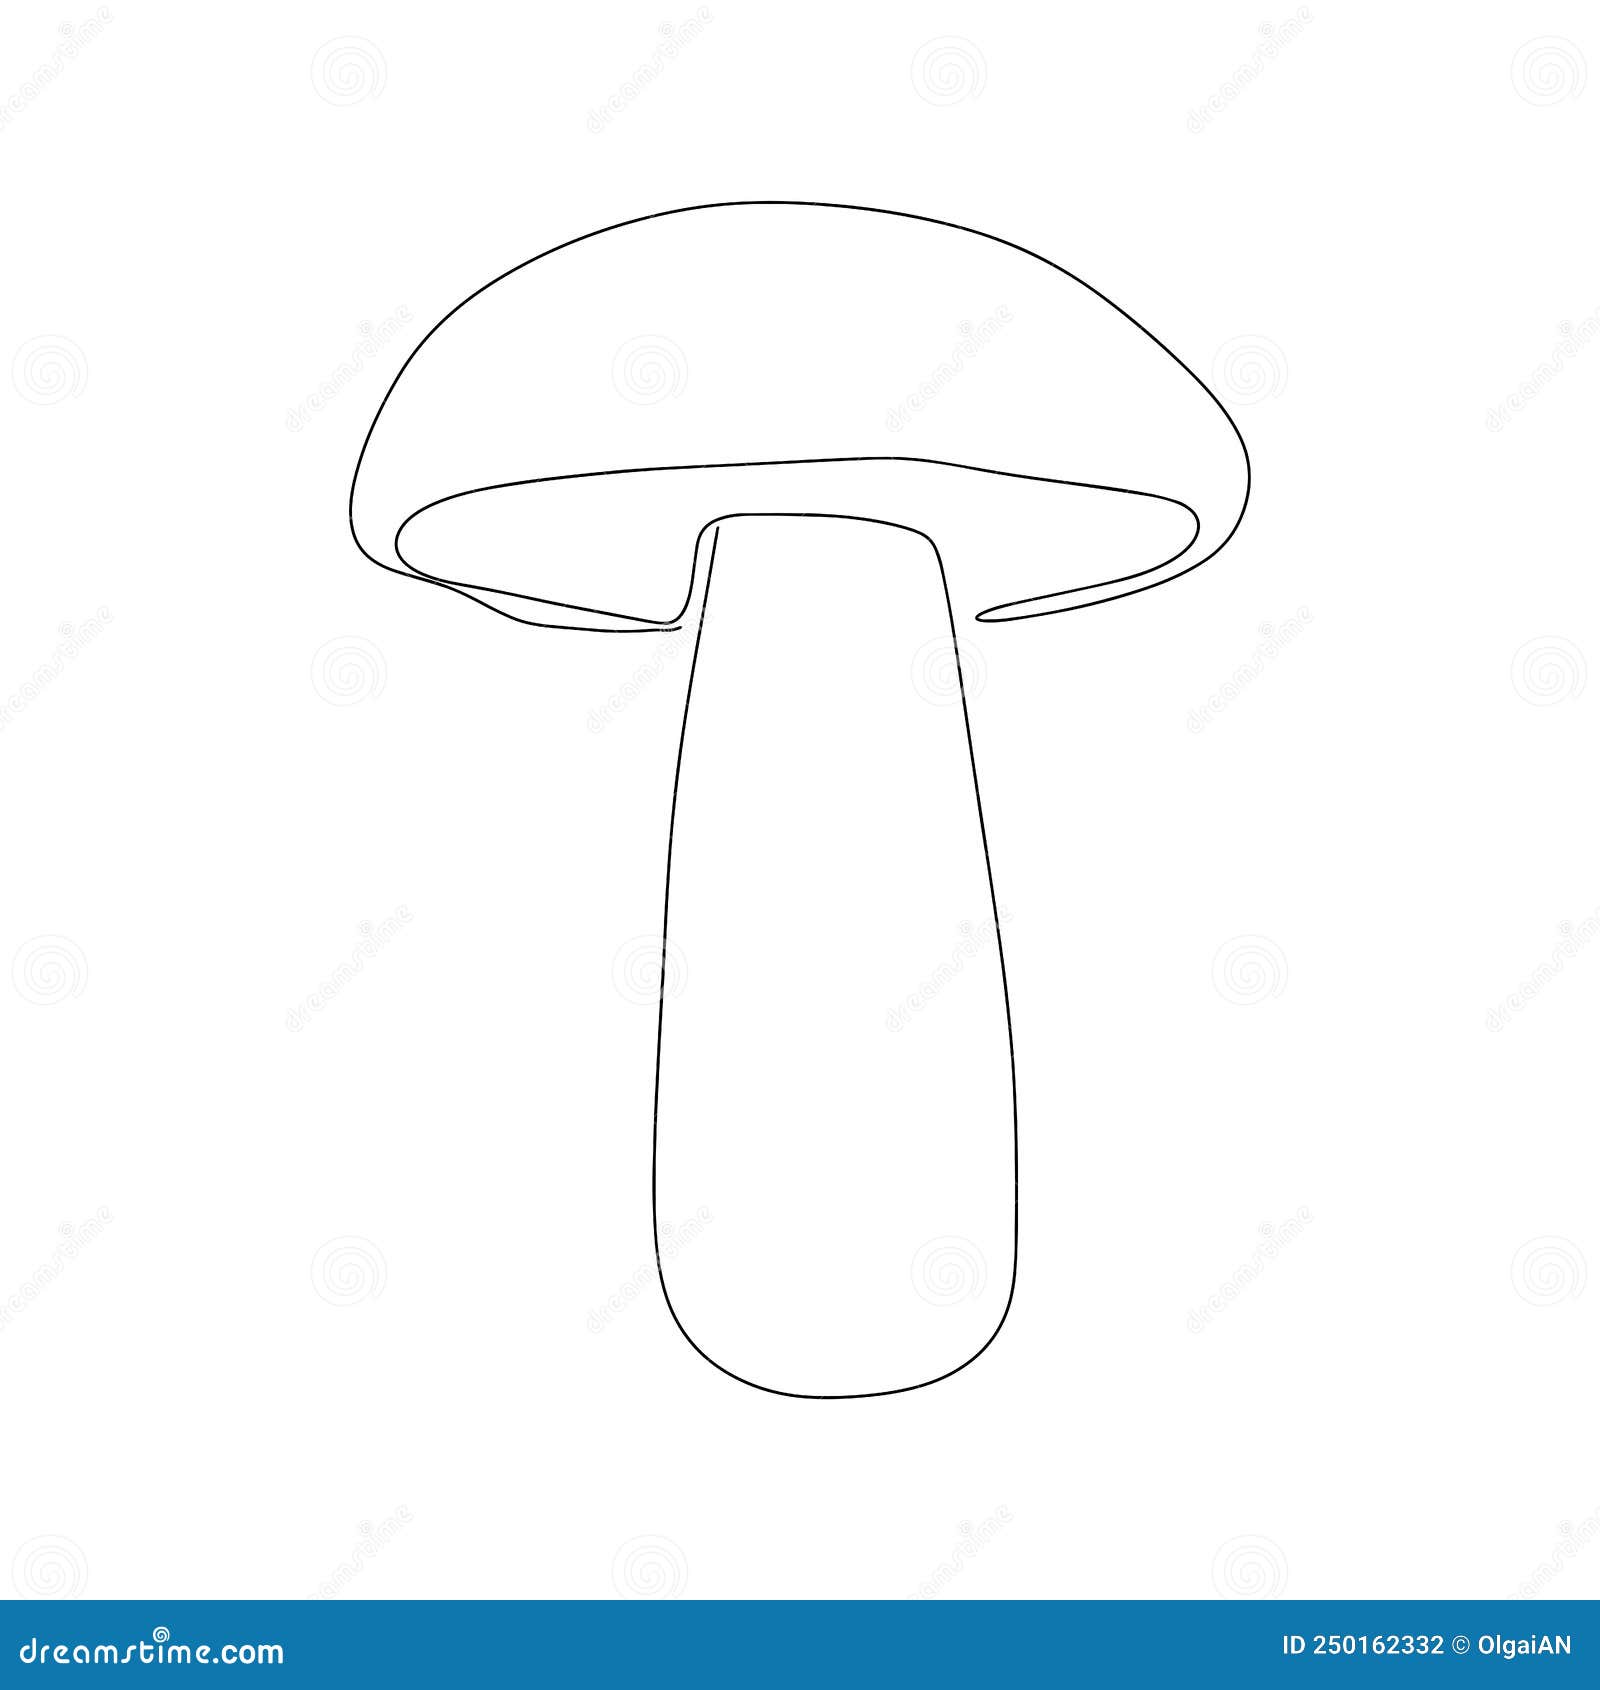 Mushroom Icon Drawn in One Line. Vector Illustration Stock Vector ...